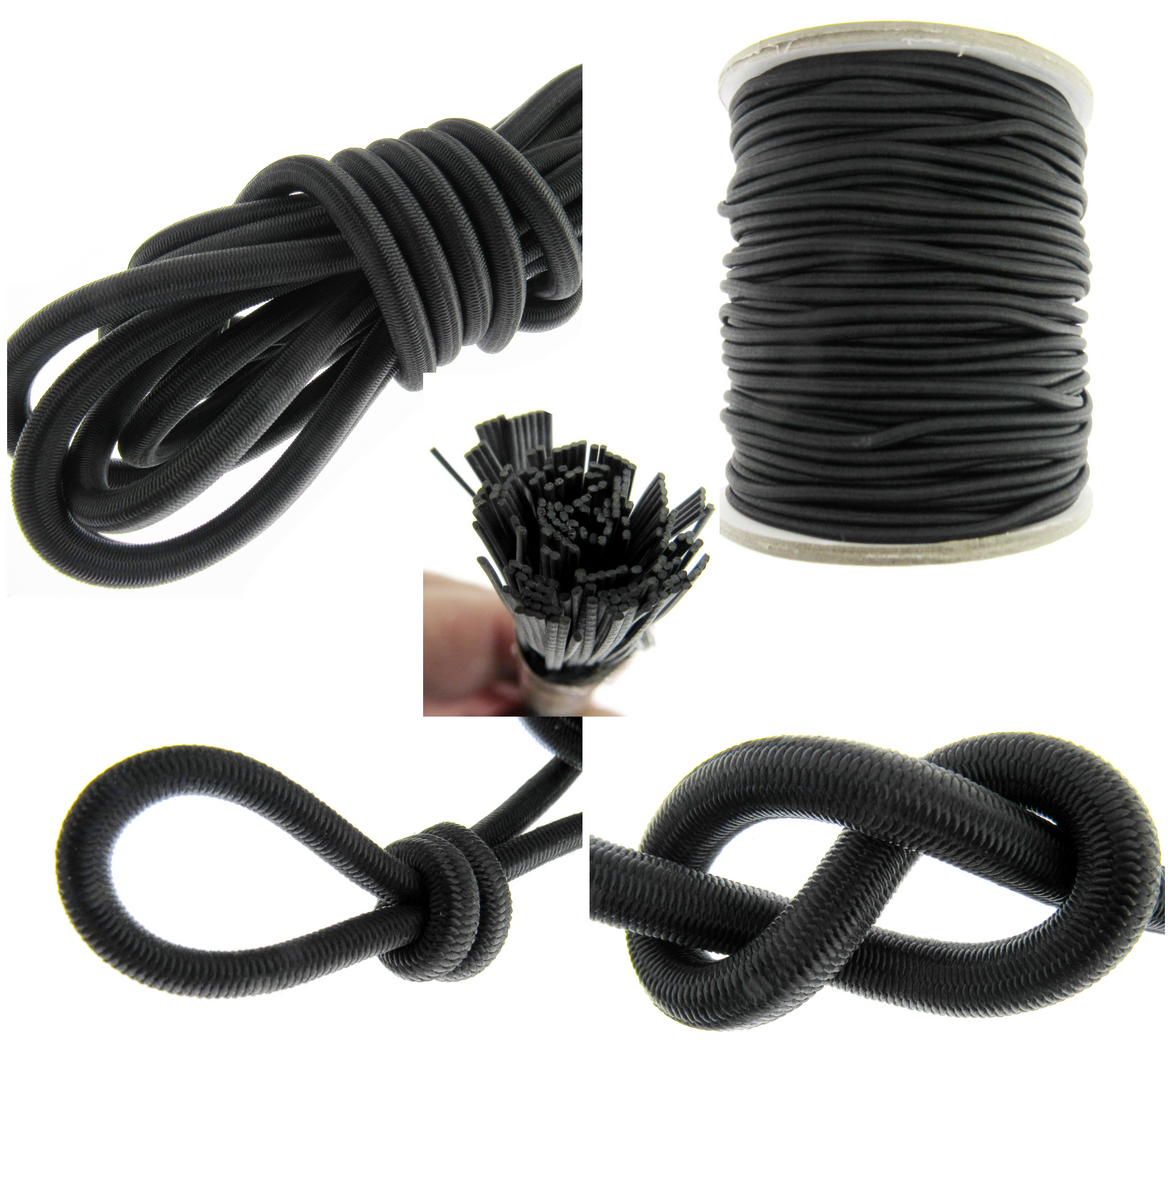 heavy duty strong round elastic rope shock cord tie 6mm 5 5 Meters 